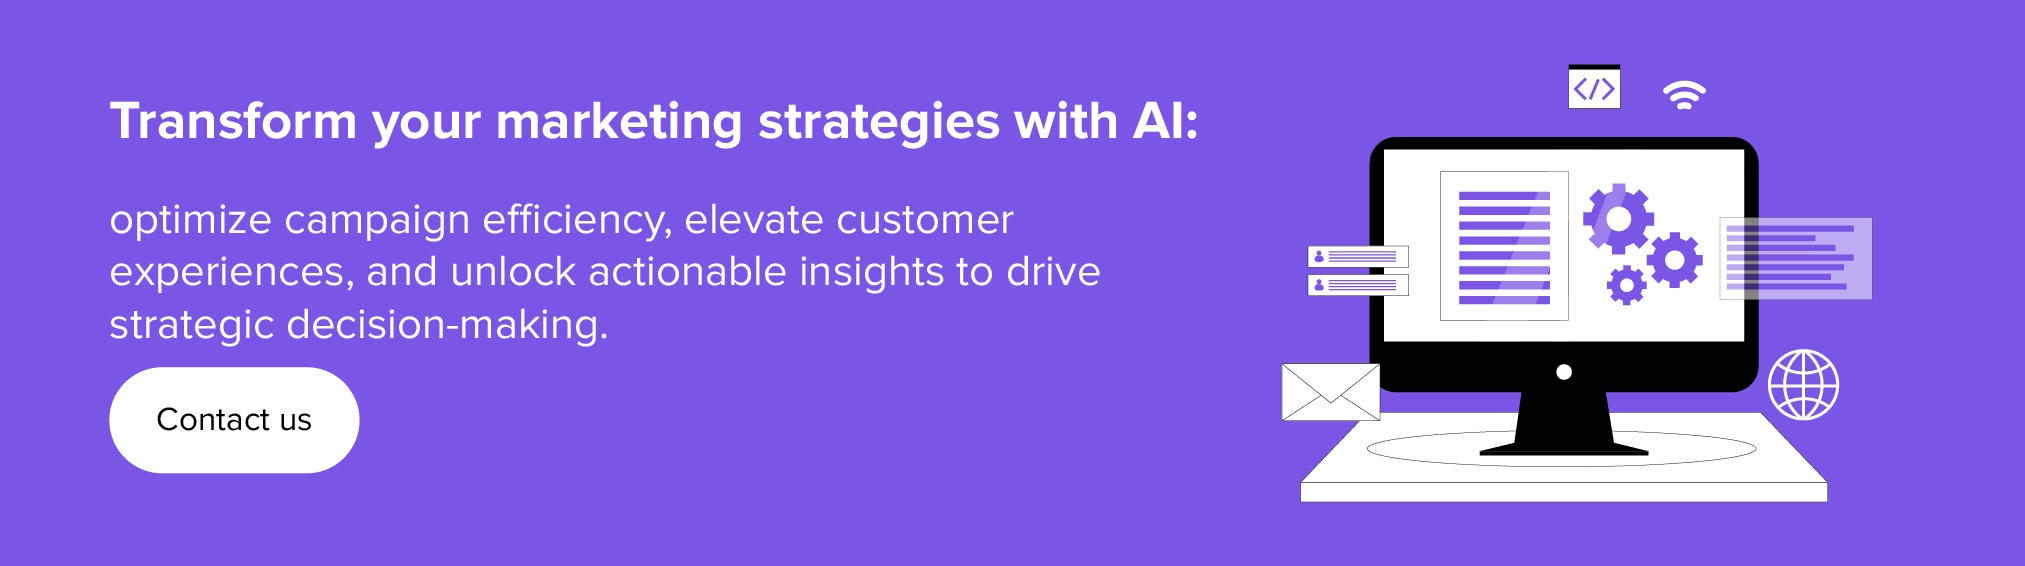 Transform marketing strategies with AI